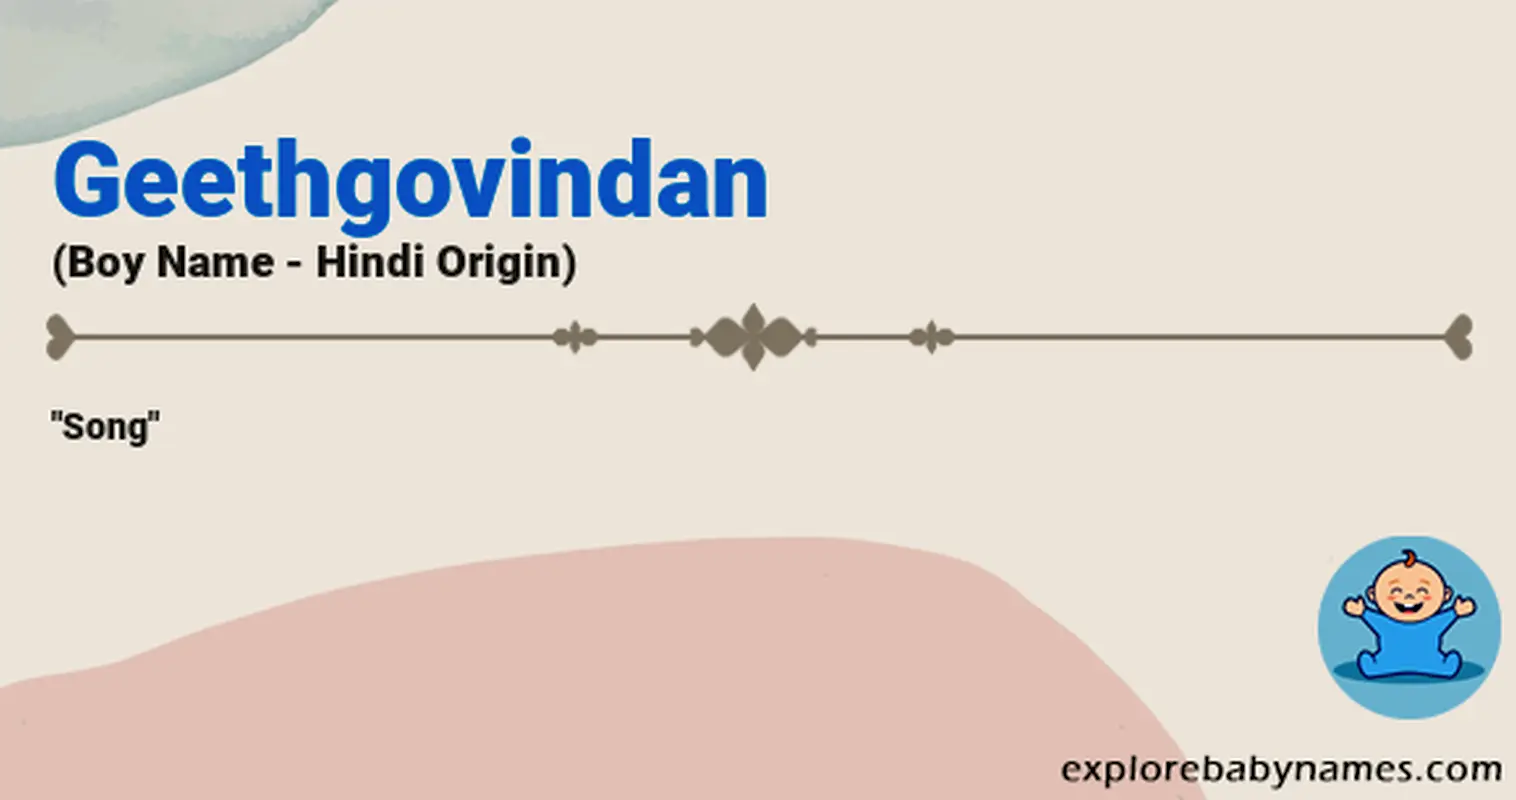 Meaning of Geethgovindan